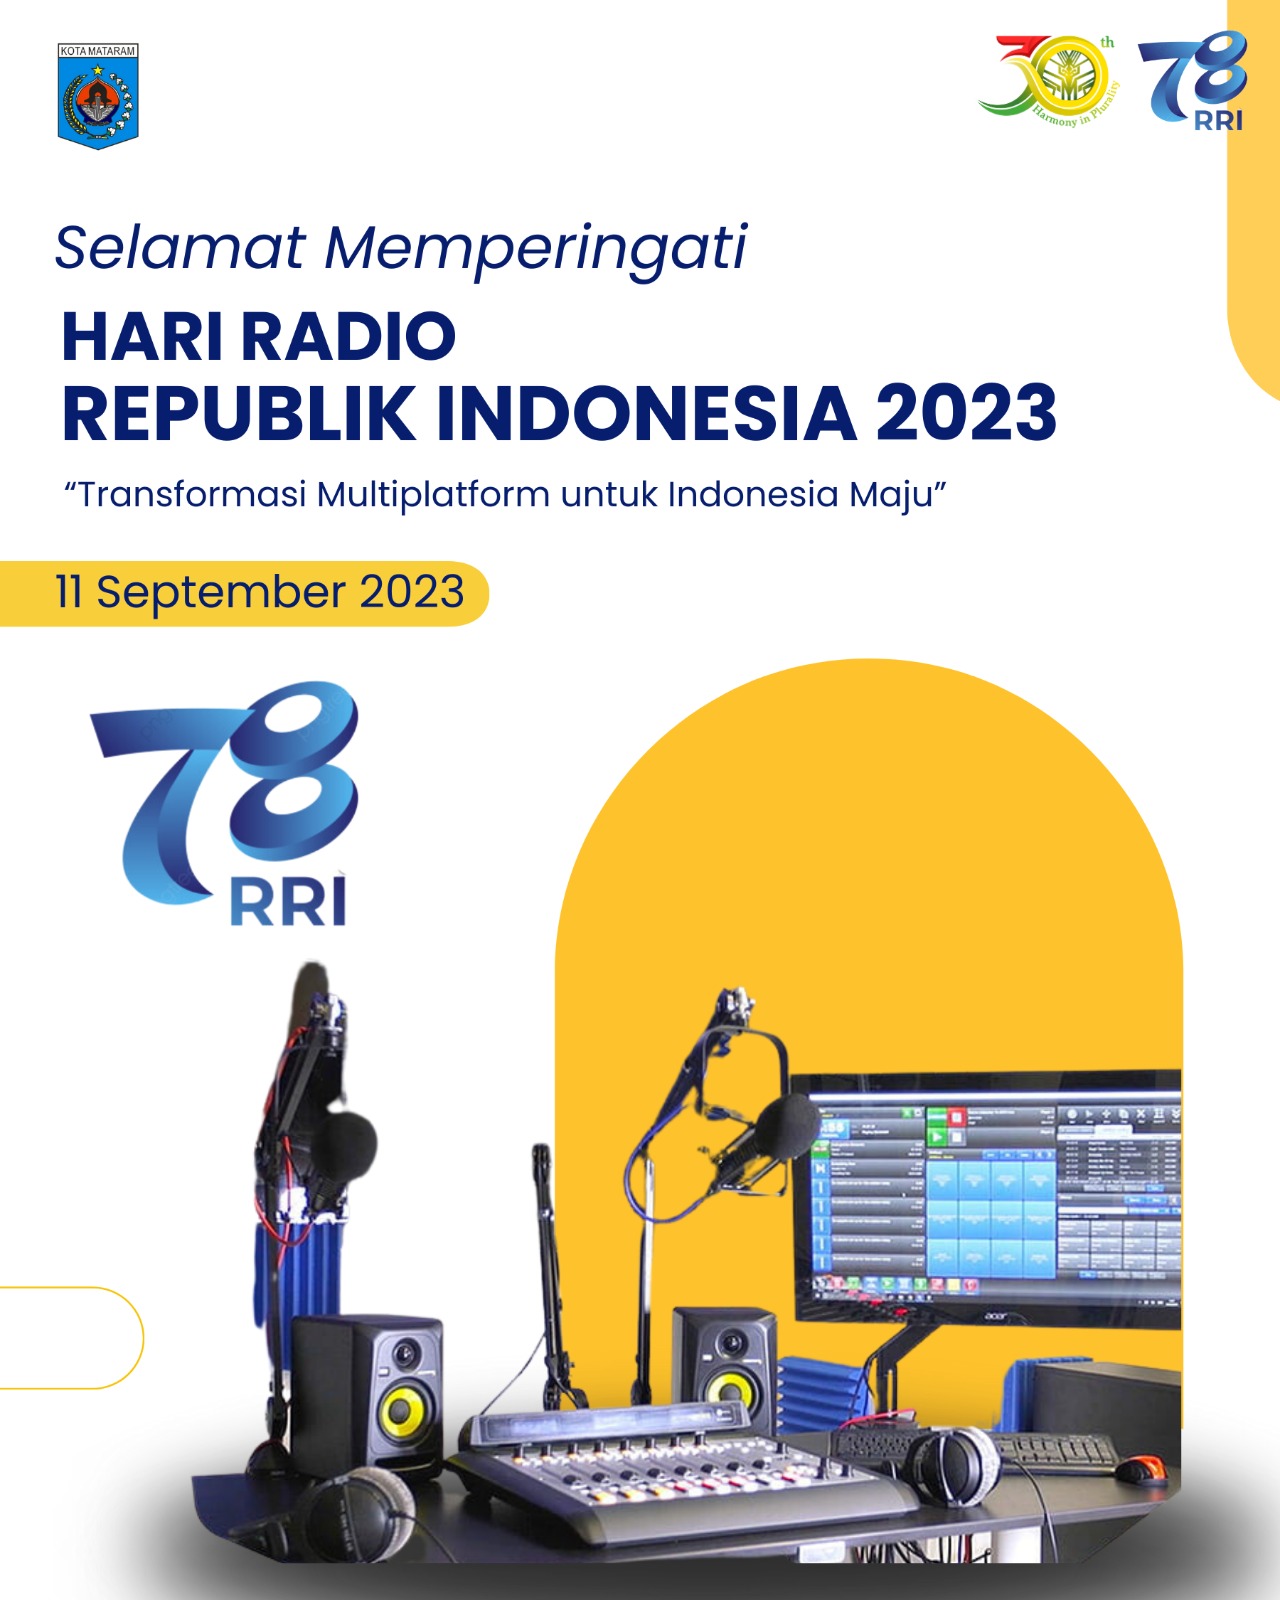 Selamat memperingati Hari Radio Republik Indonesia